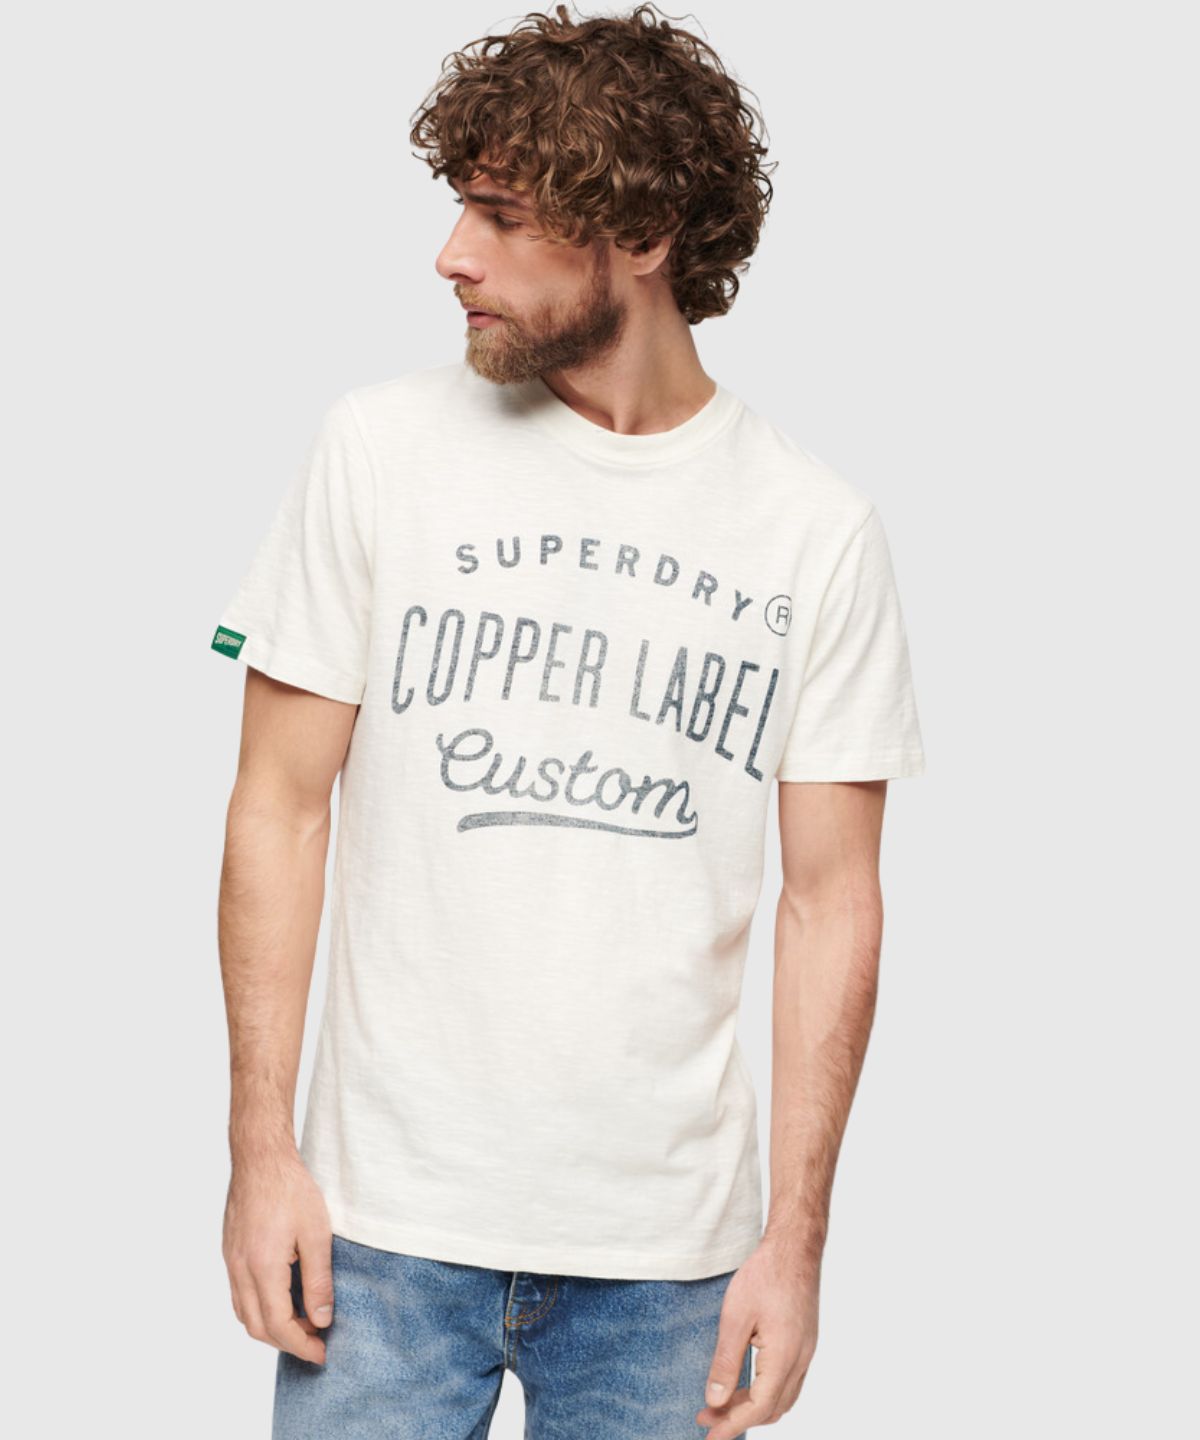 Copper Label Workwear Tee